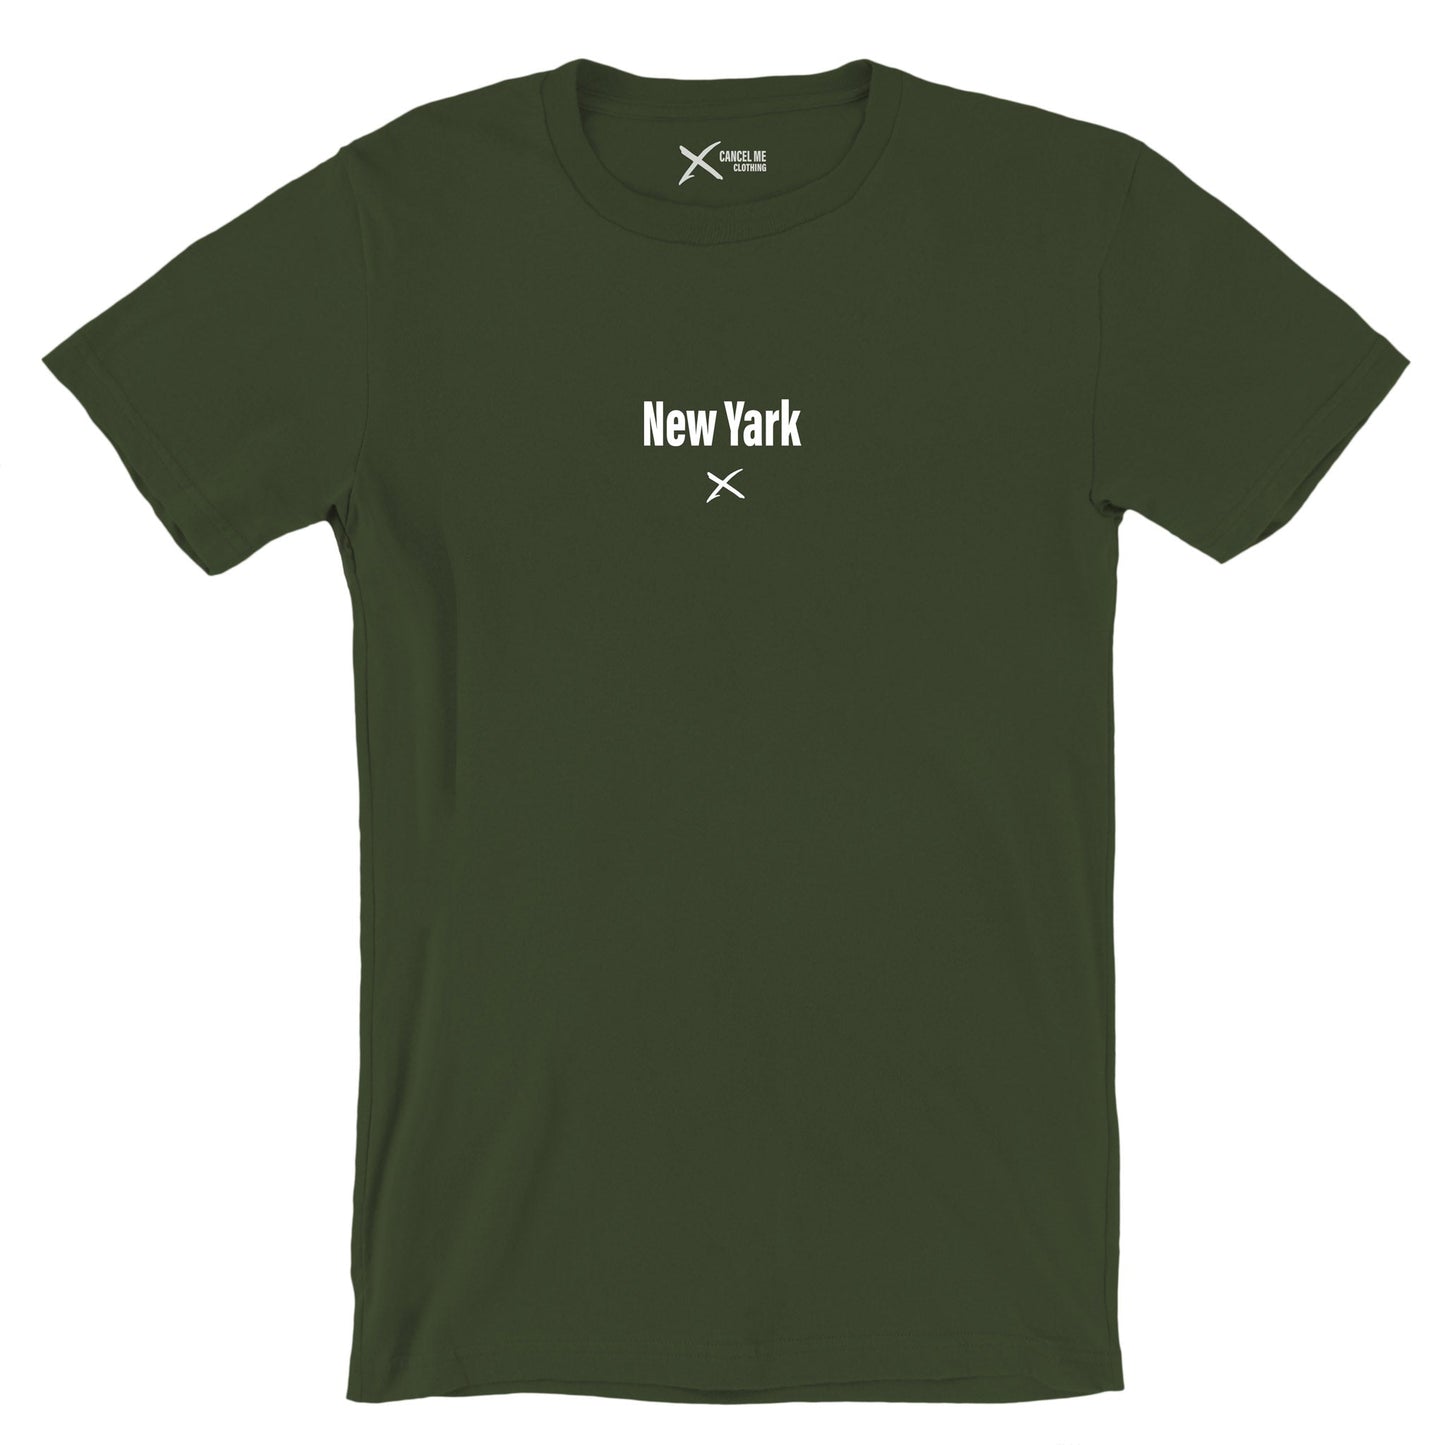 New Yark - Shirt